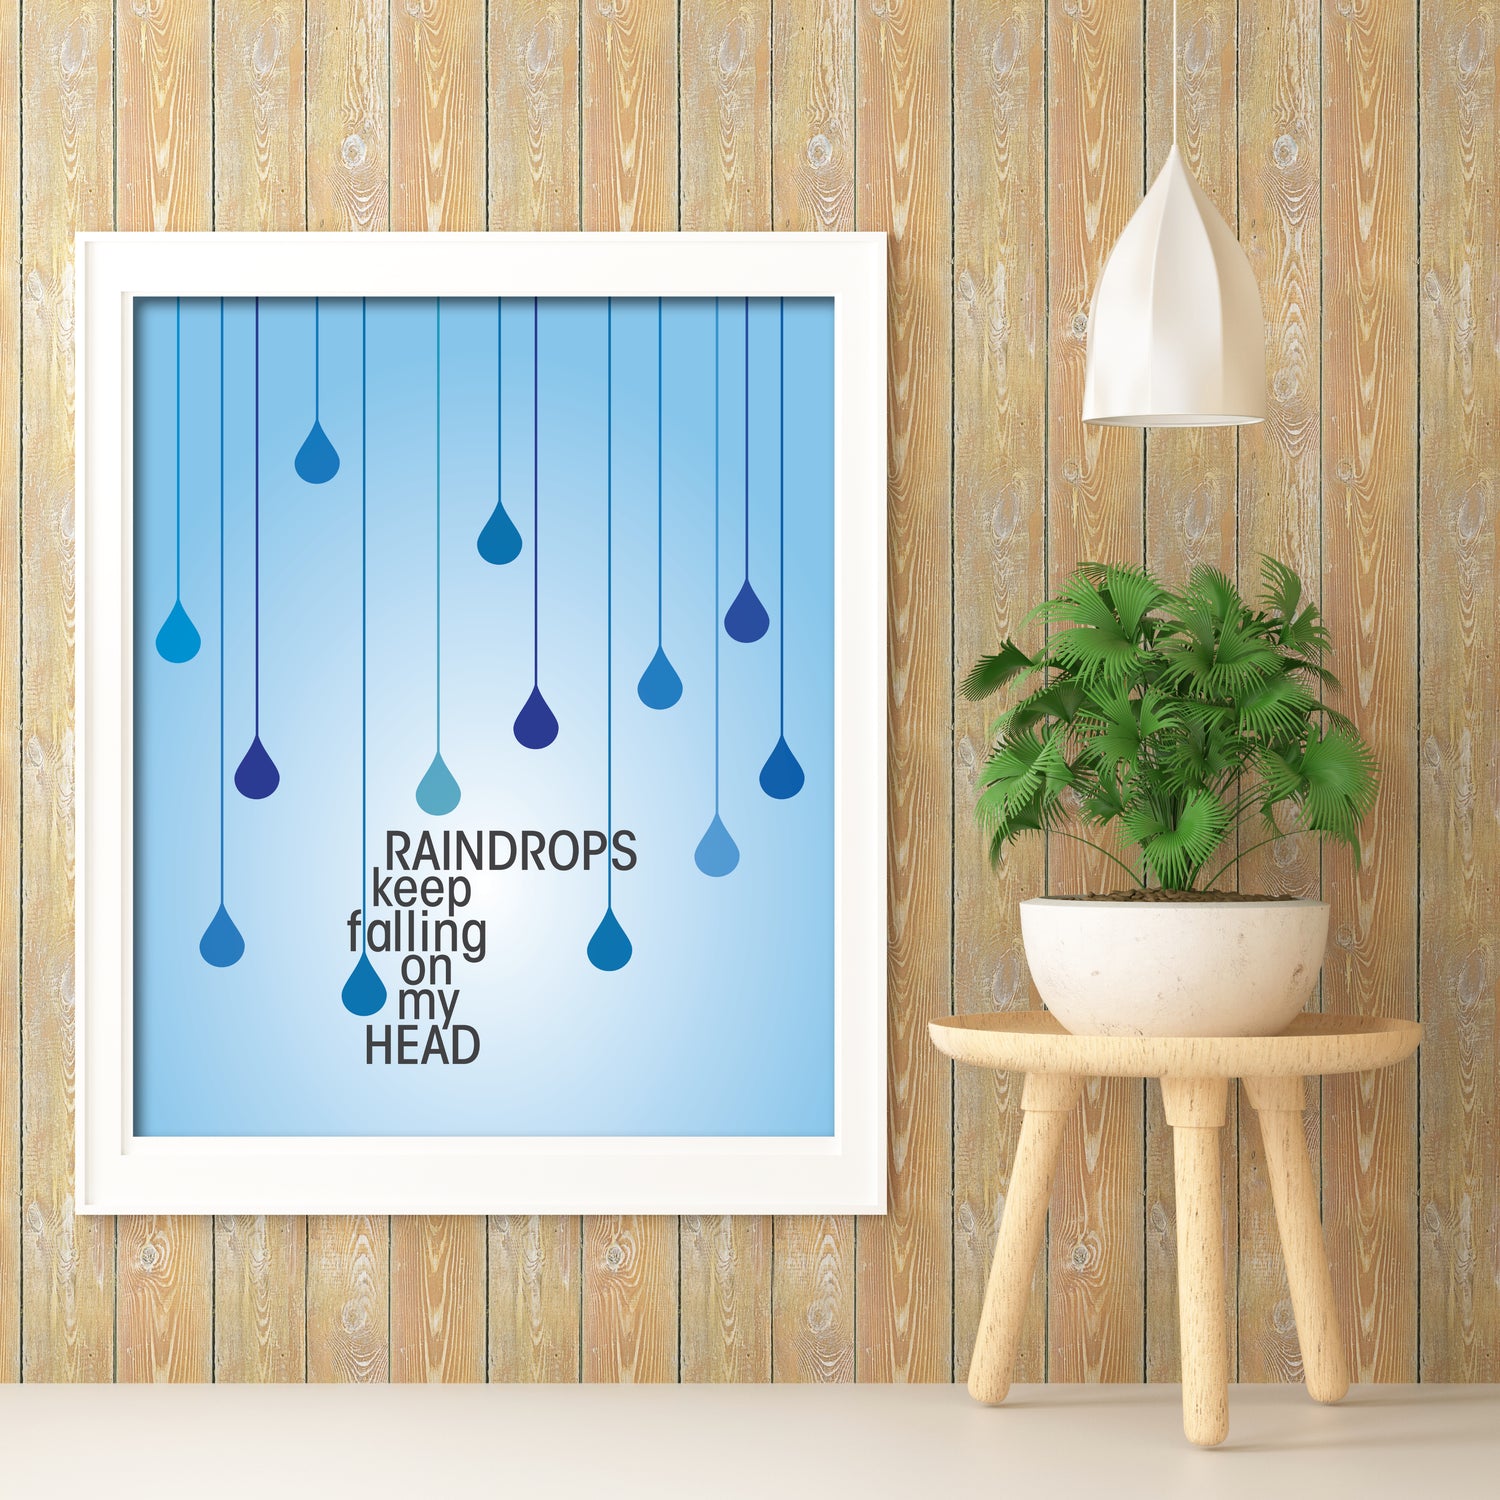 Raindrops Keep Falling on My Head by BJ Thomas - Pop Music Lyric Art Memorabilia